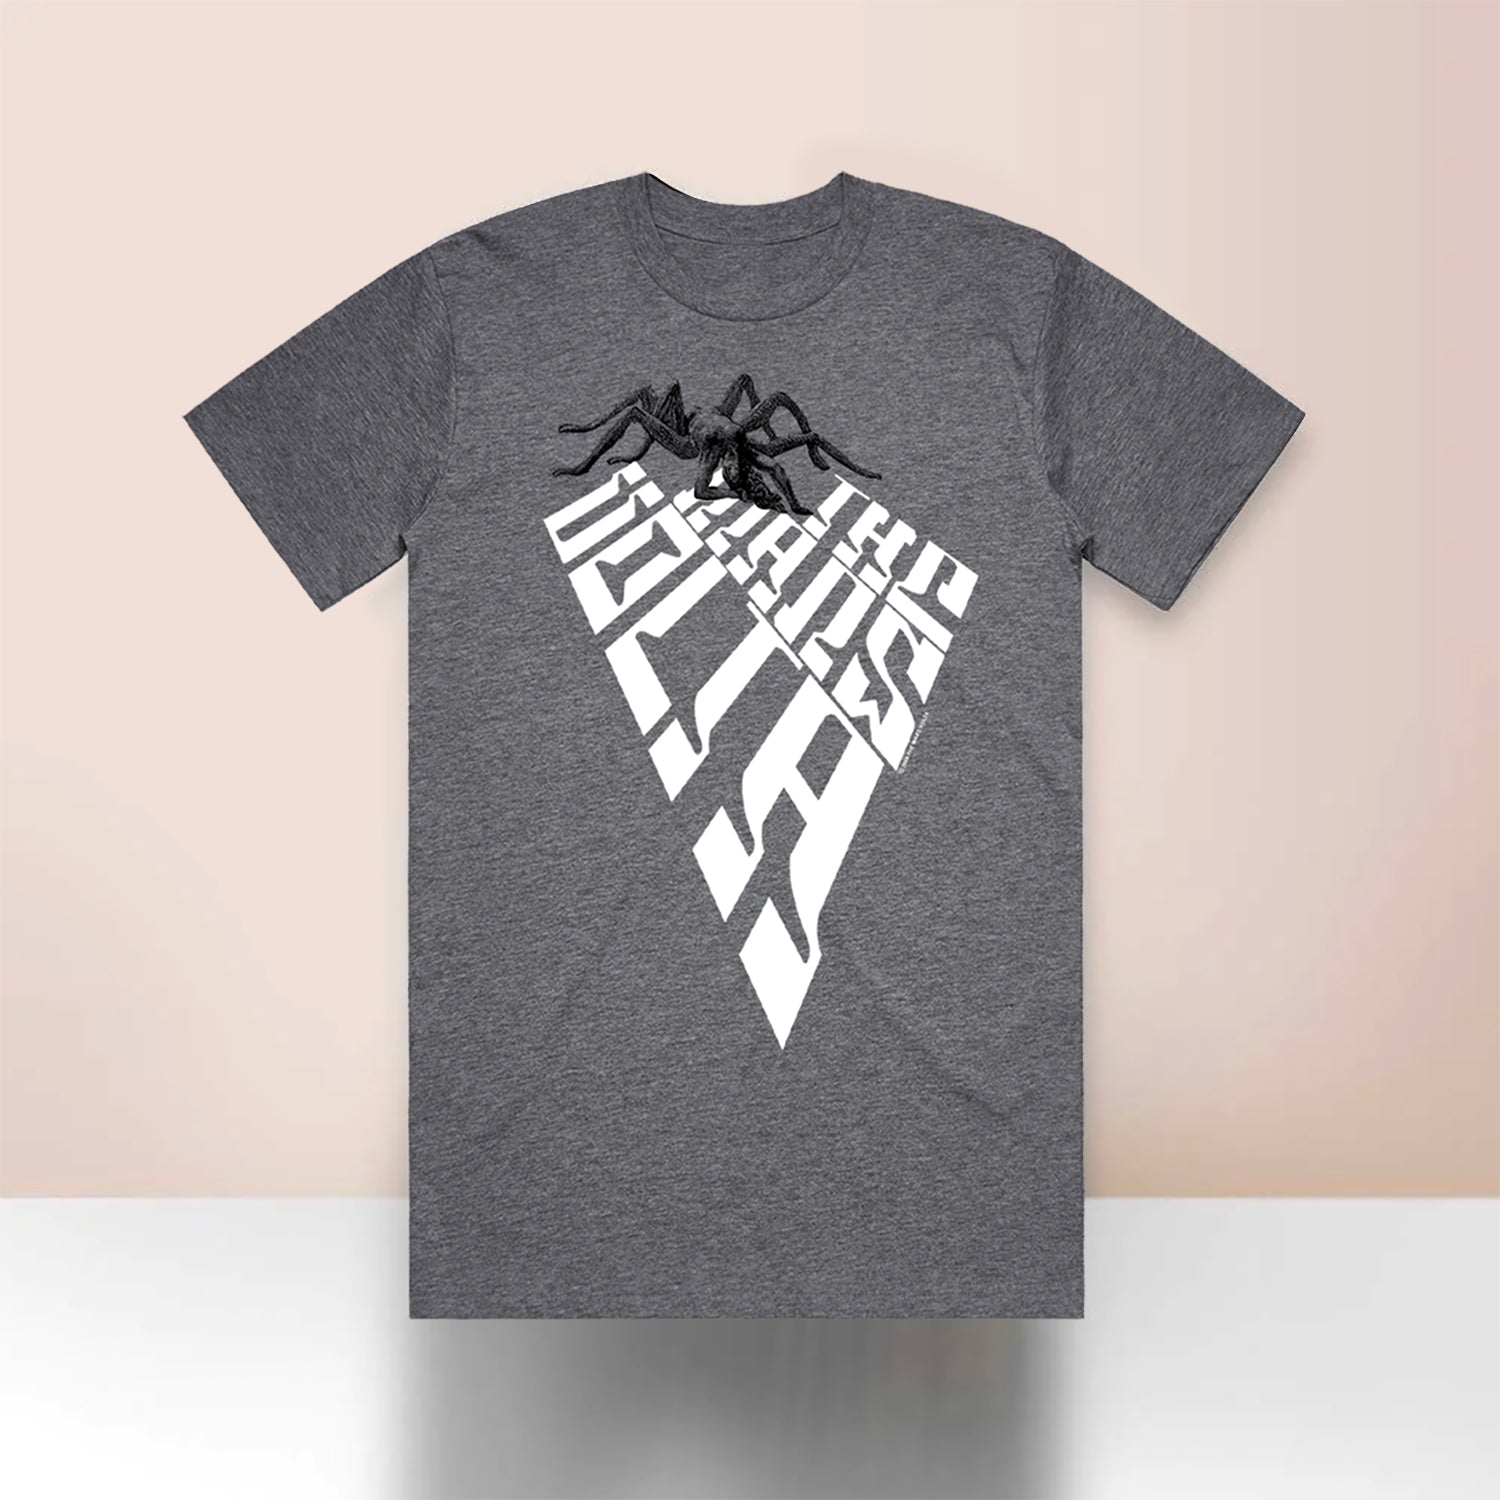 The Mars Volta - Arachne Grey T-Shirt